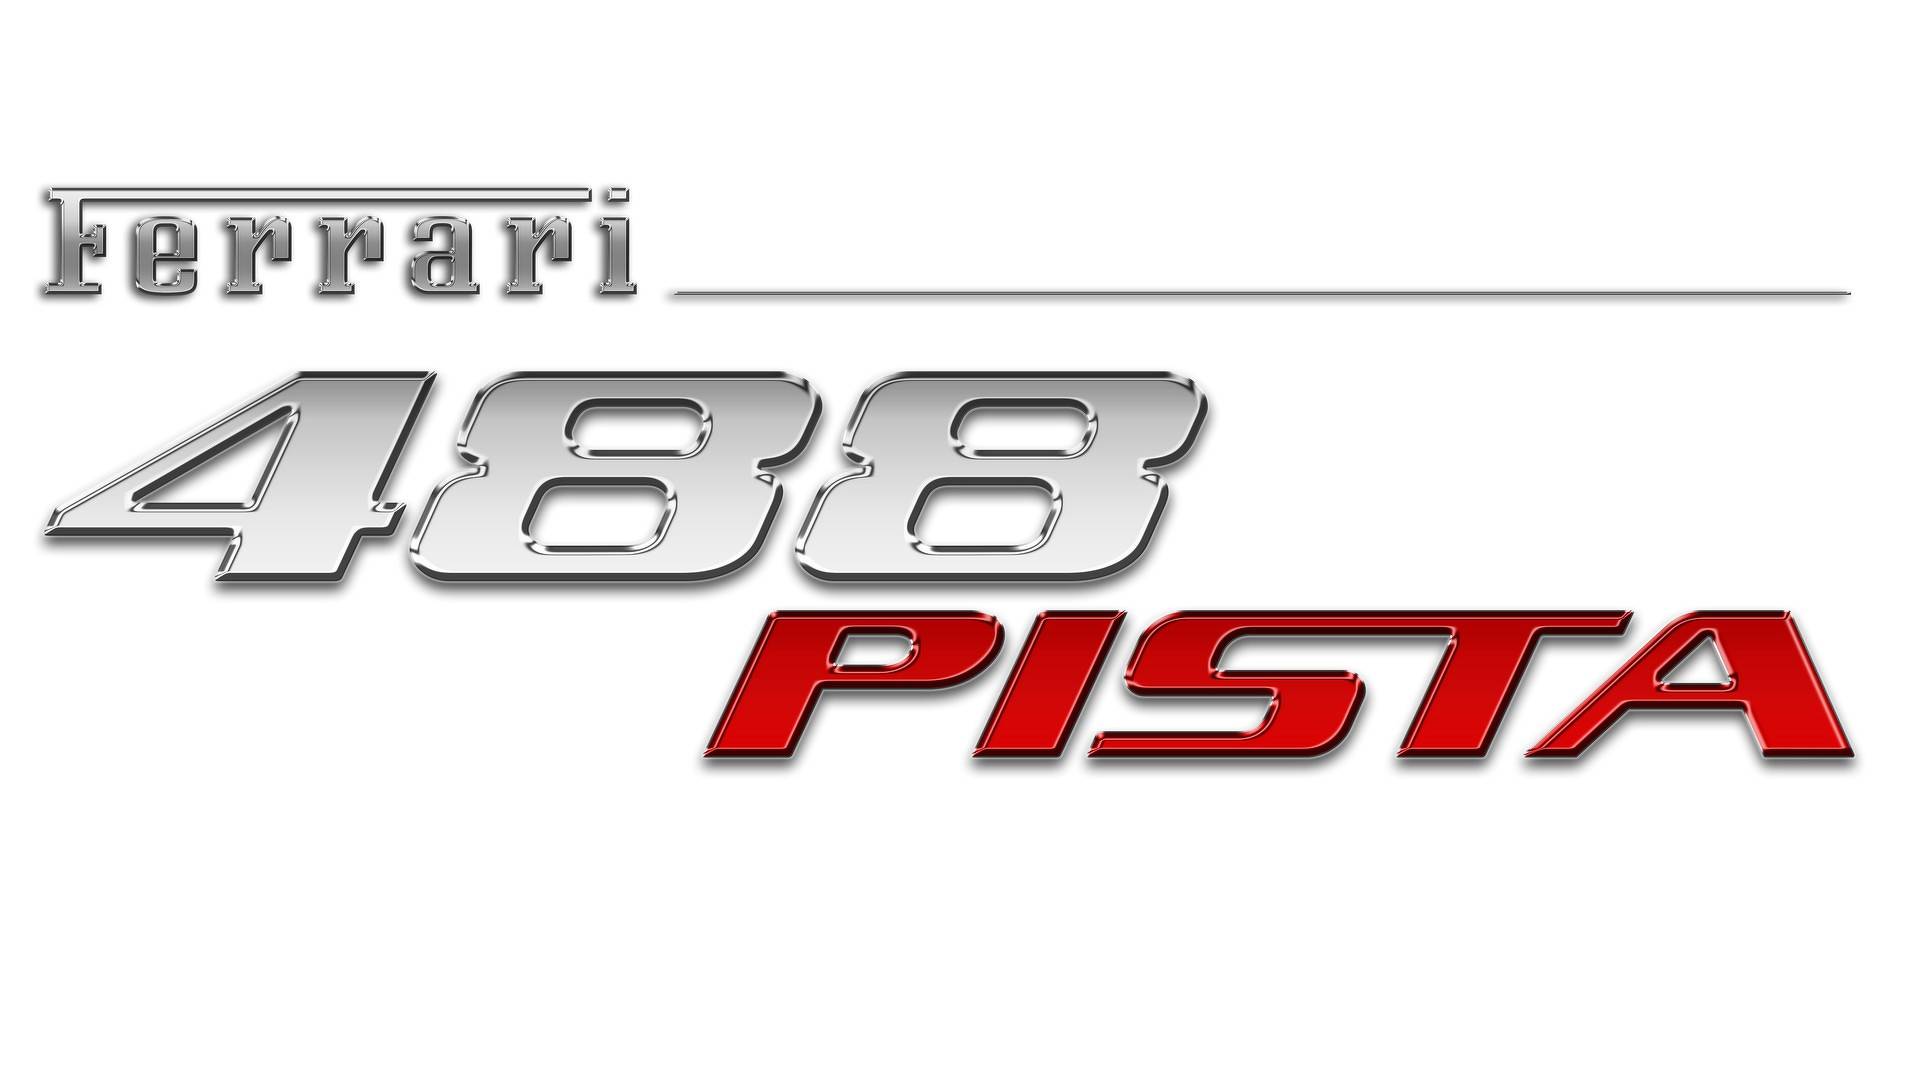 Ferrari 488 Pista Is Most Powerful V8 Engined Ferrari Ever